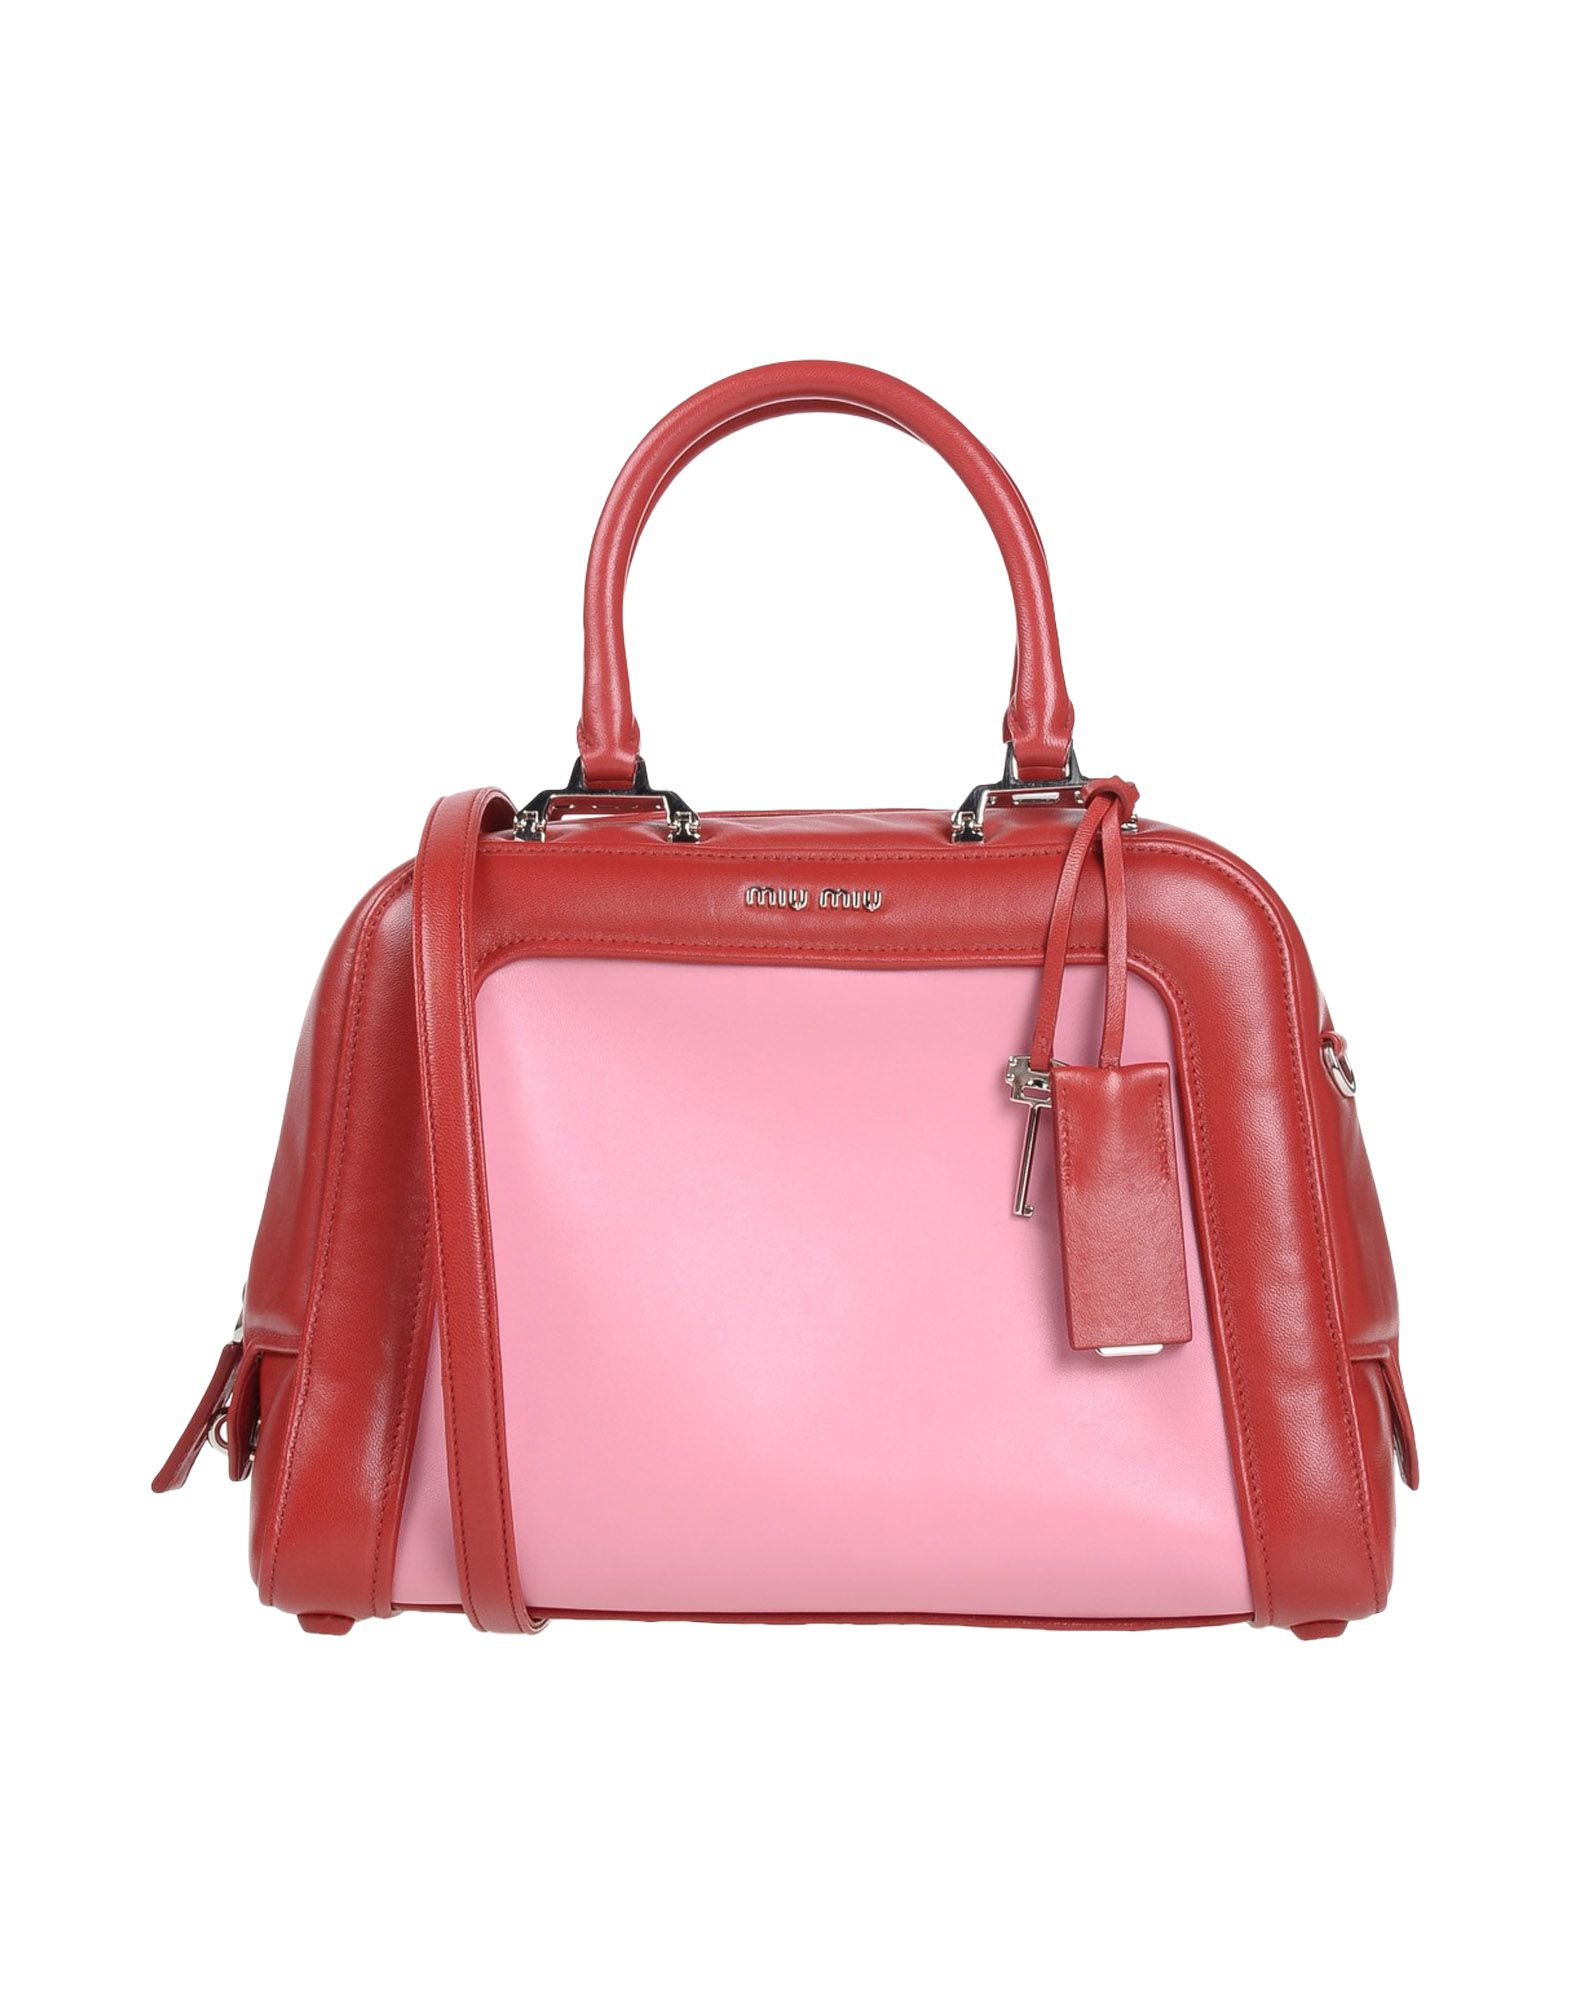 Lyst - Miu Miu Handbag in Pink